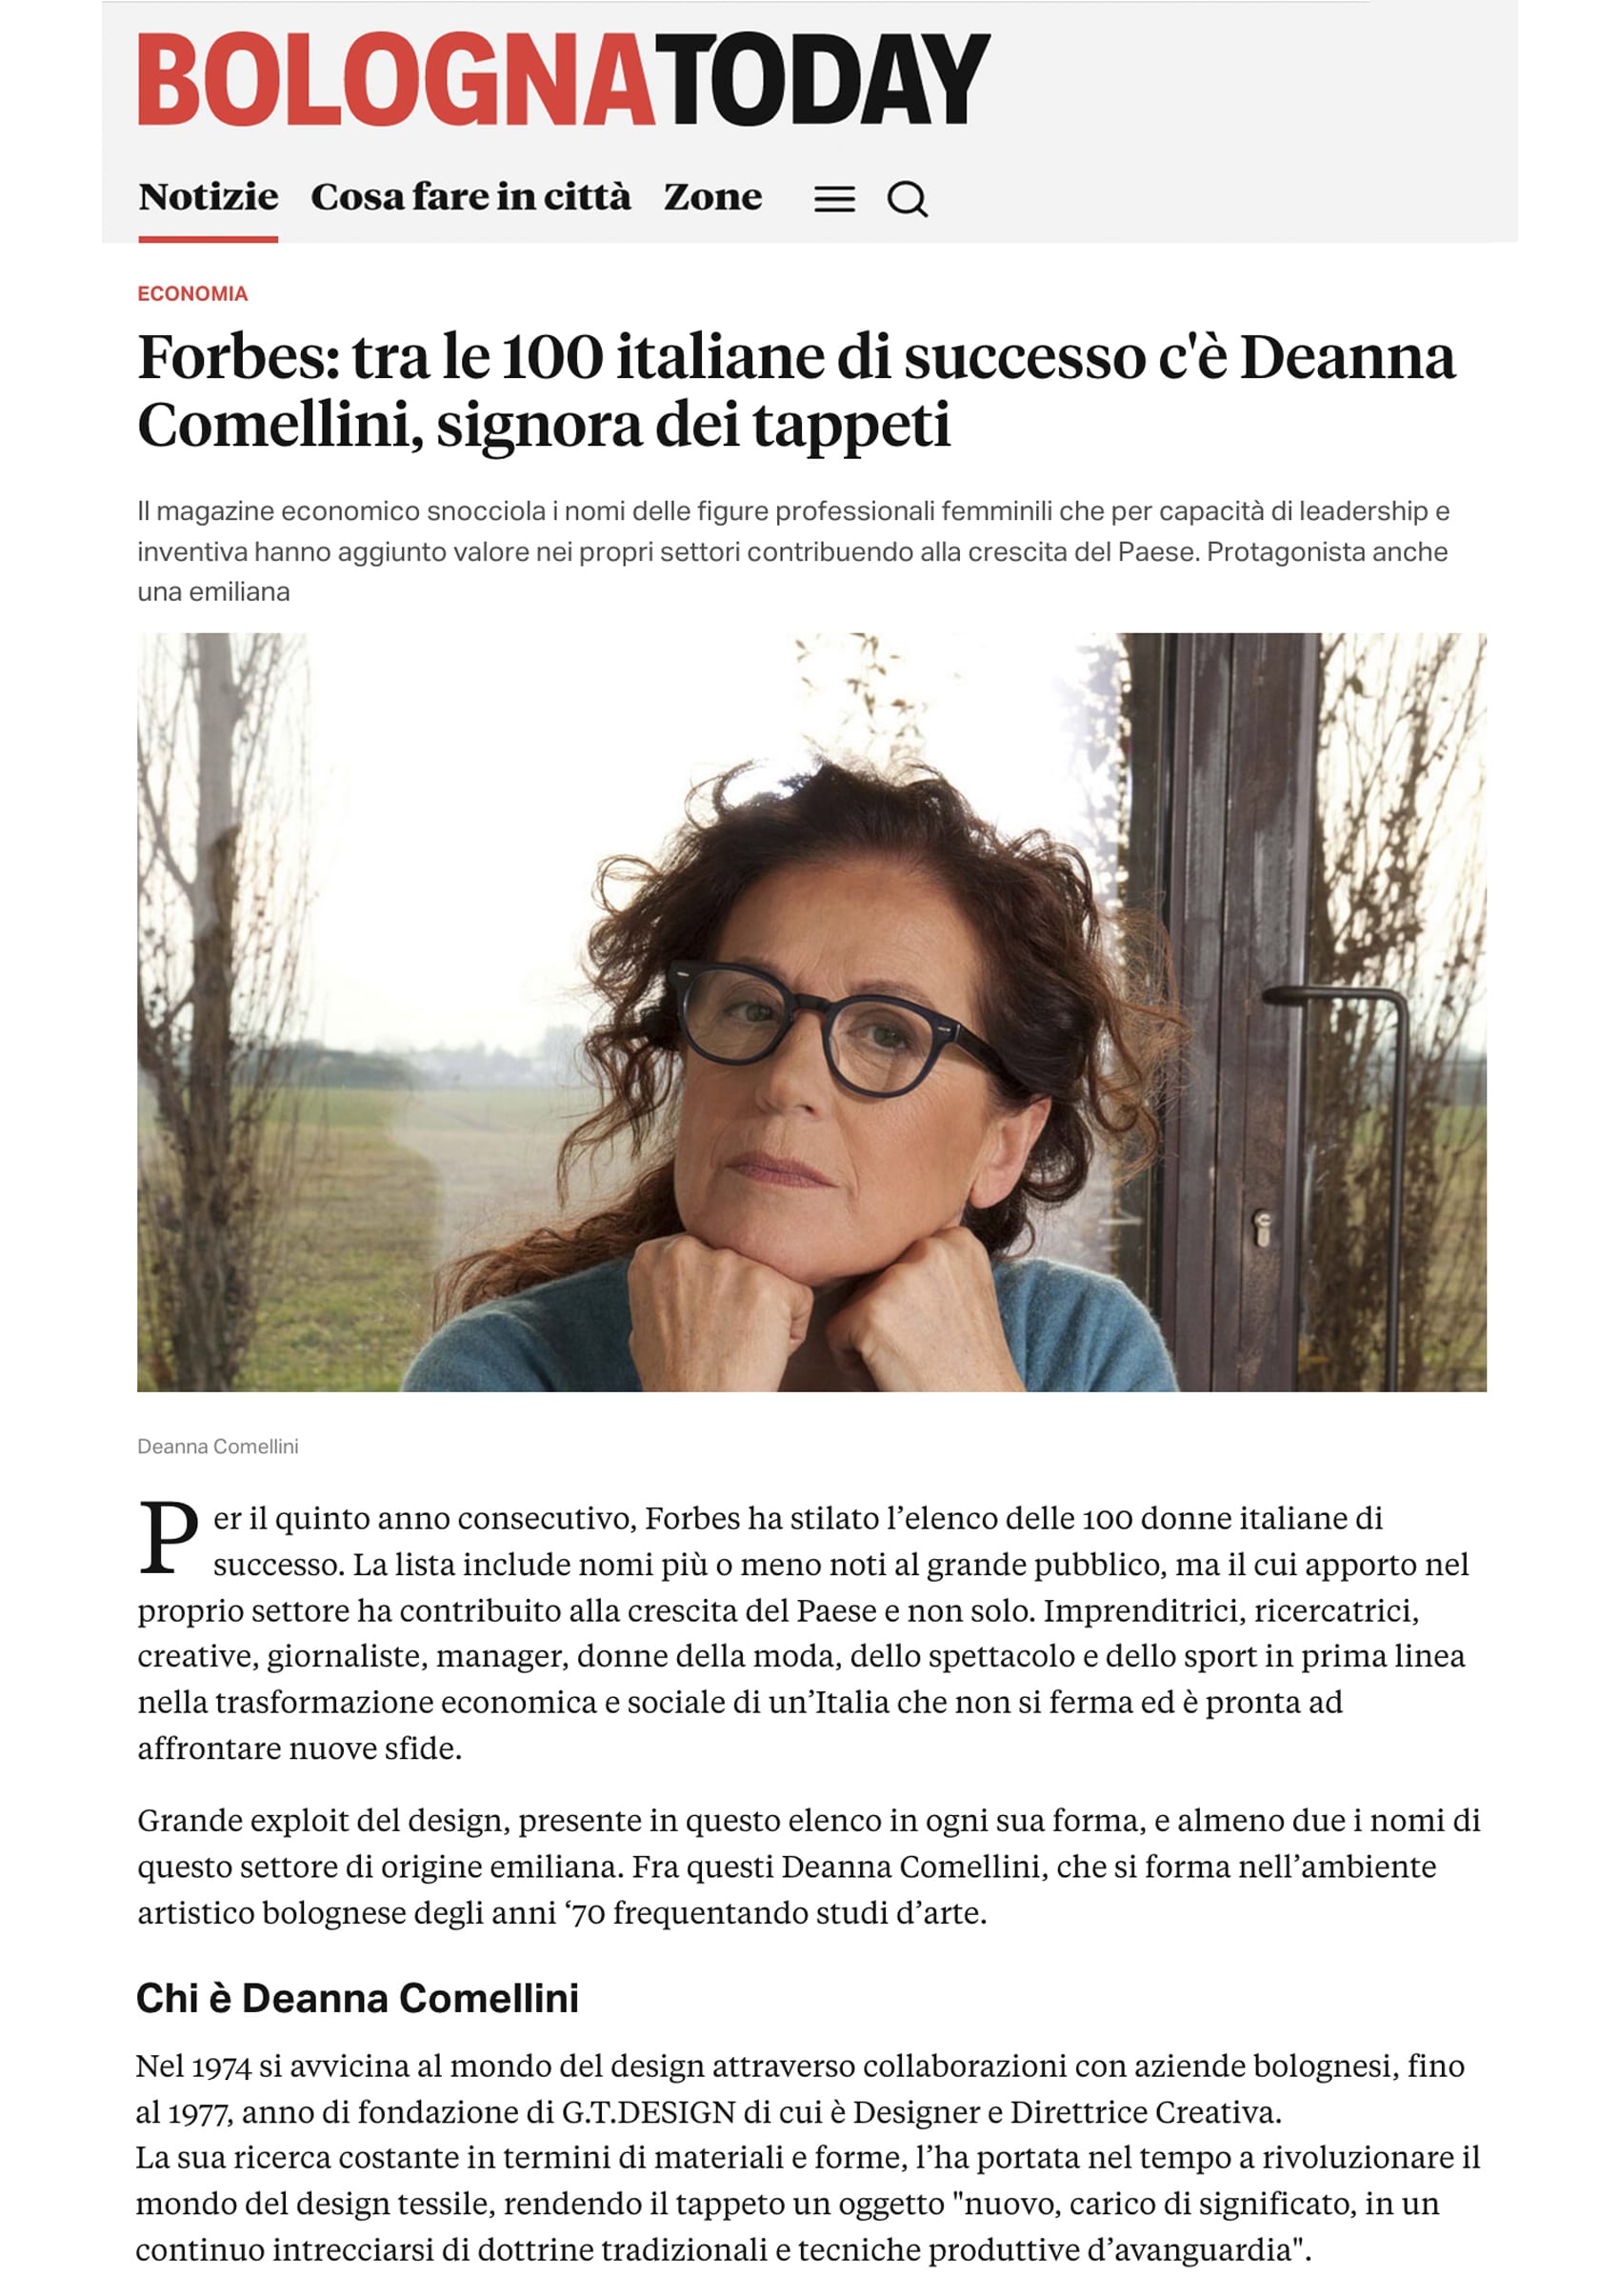 Bologna Today GTDESIGN Deanna Comellini Forbes